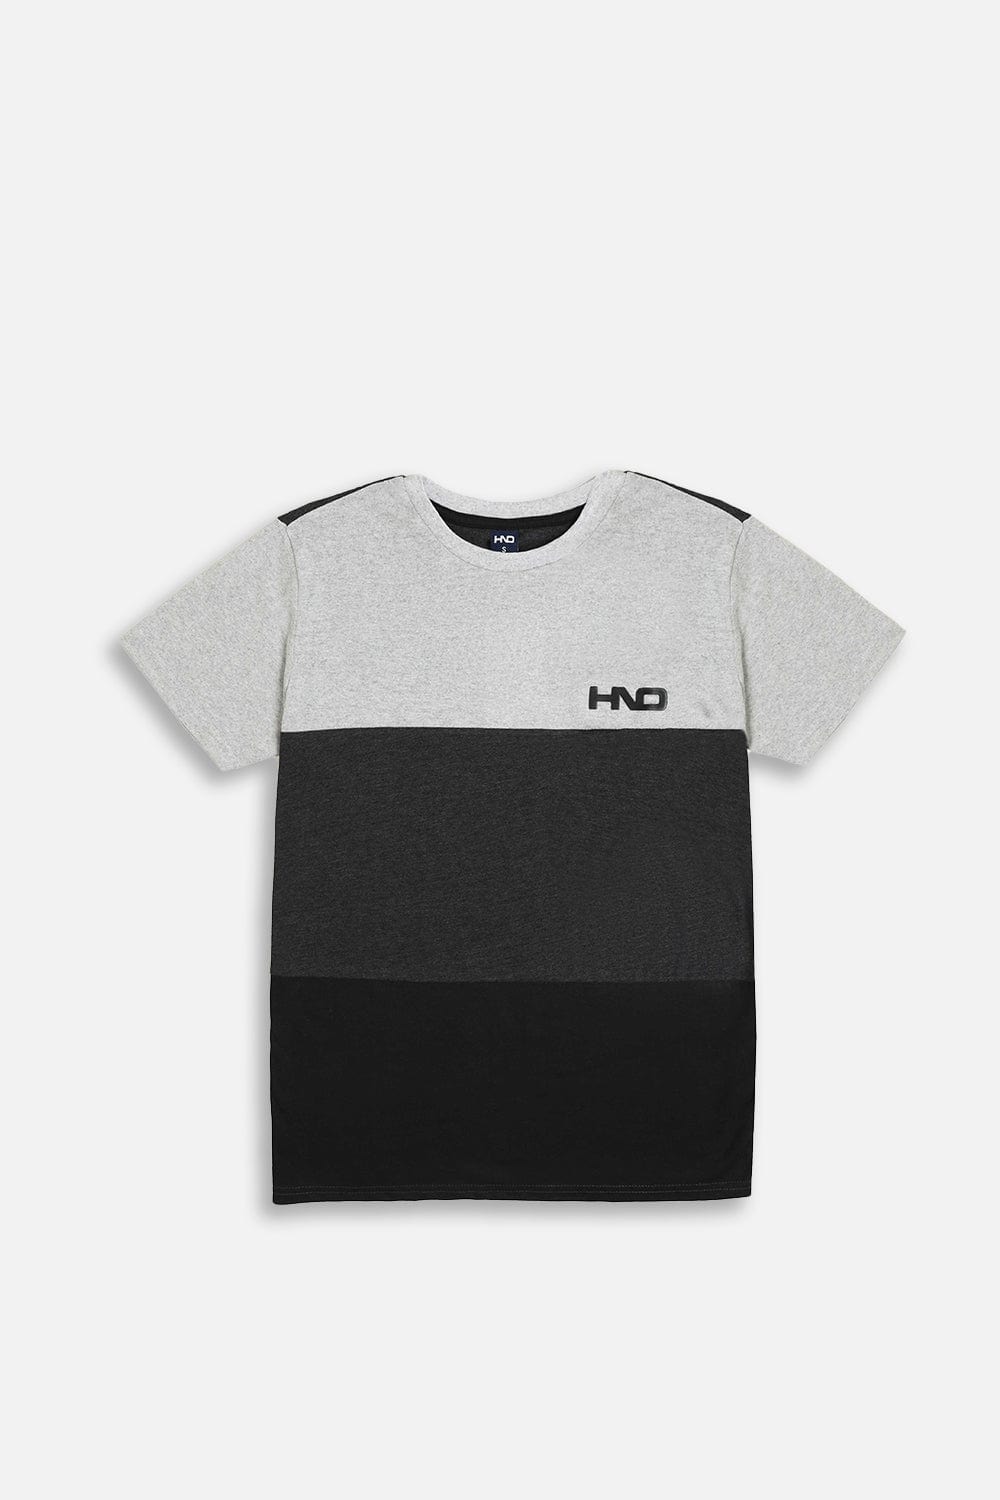 Hope Not Out by Shahid Afridi Men T-Shirt Man Gray Hno Hd Printed T-Shirt